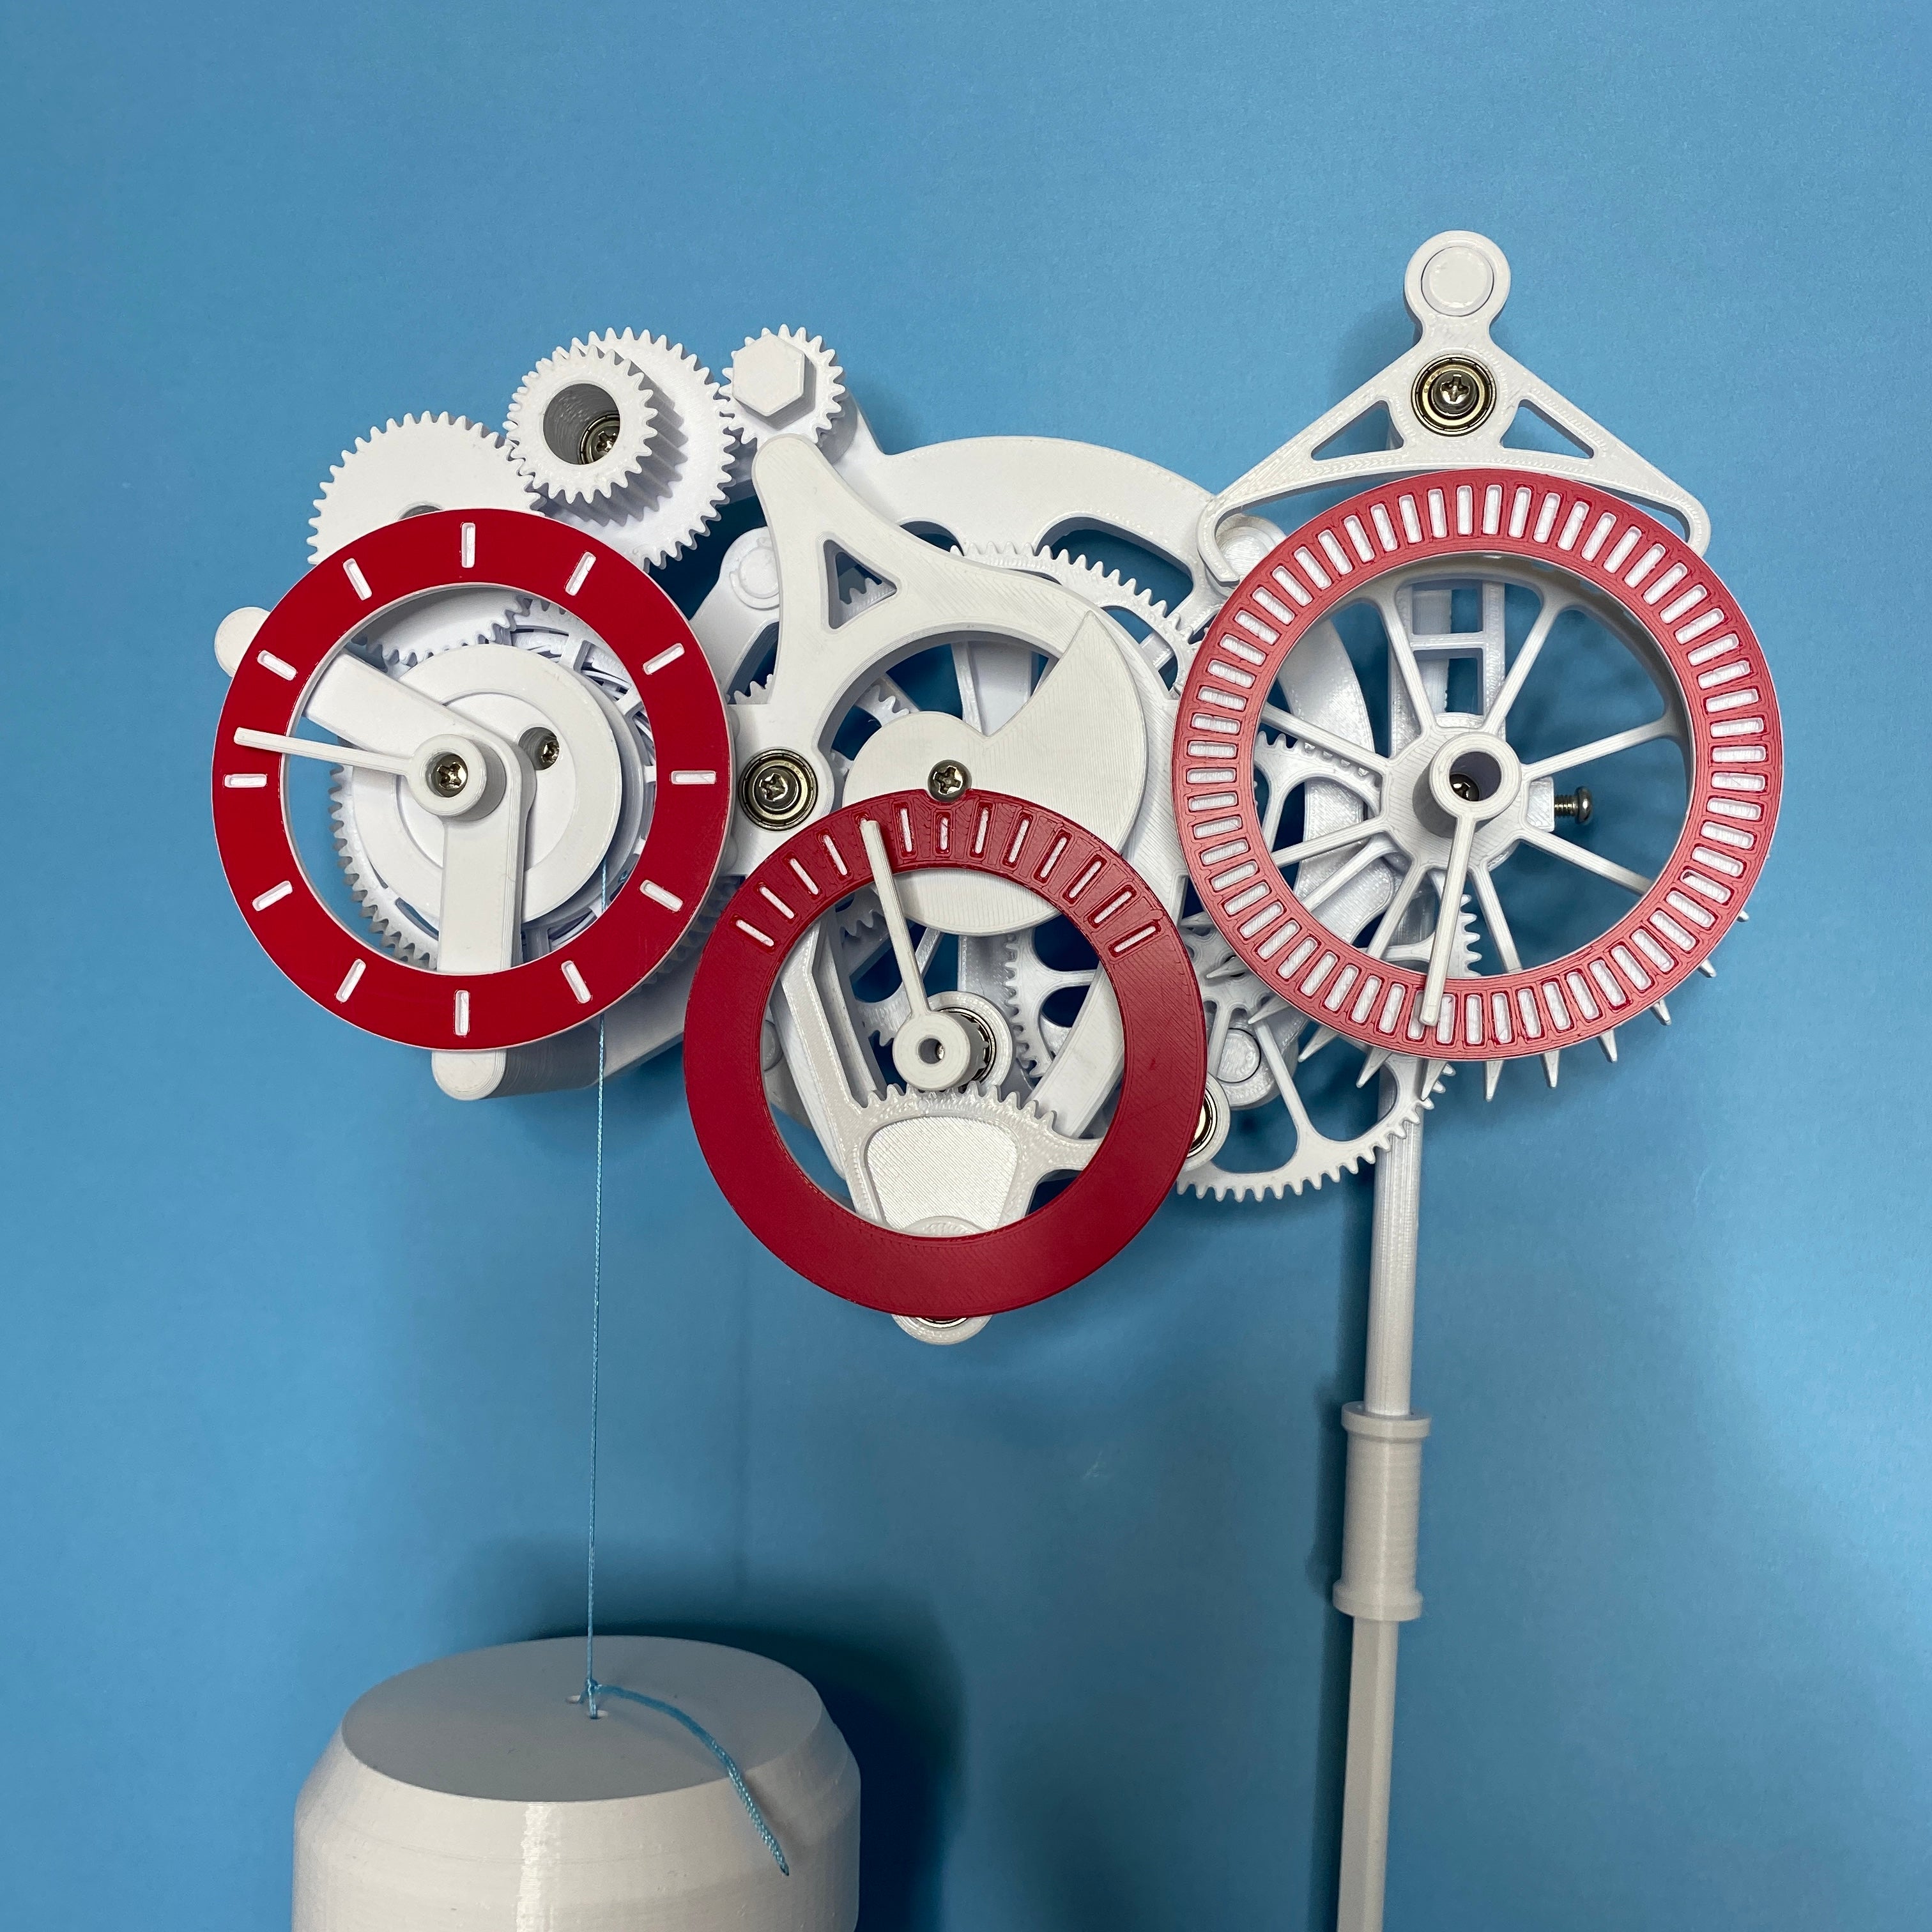 The 3D Printed Wall Clock